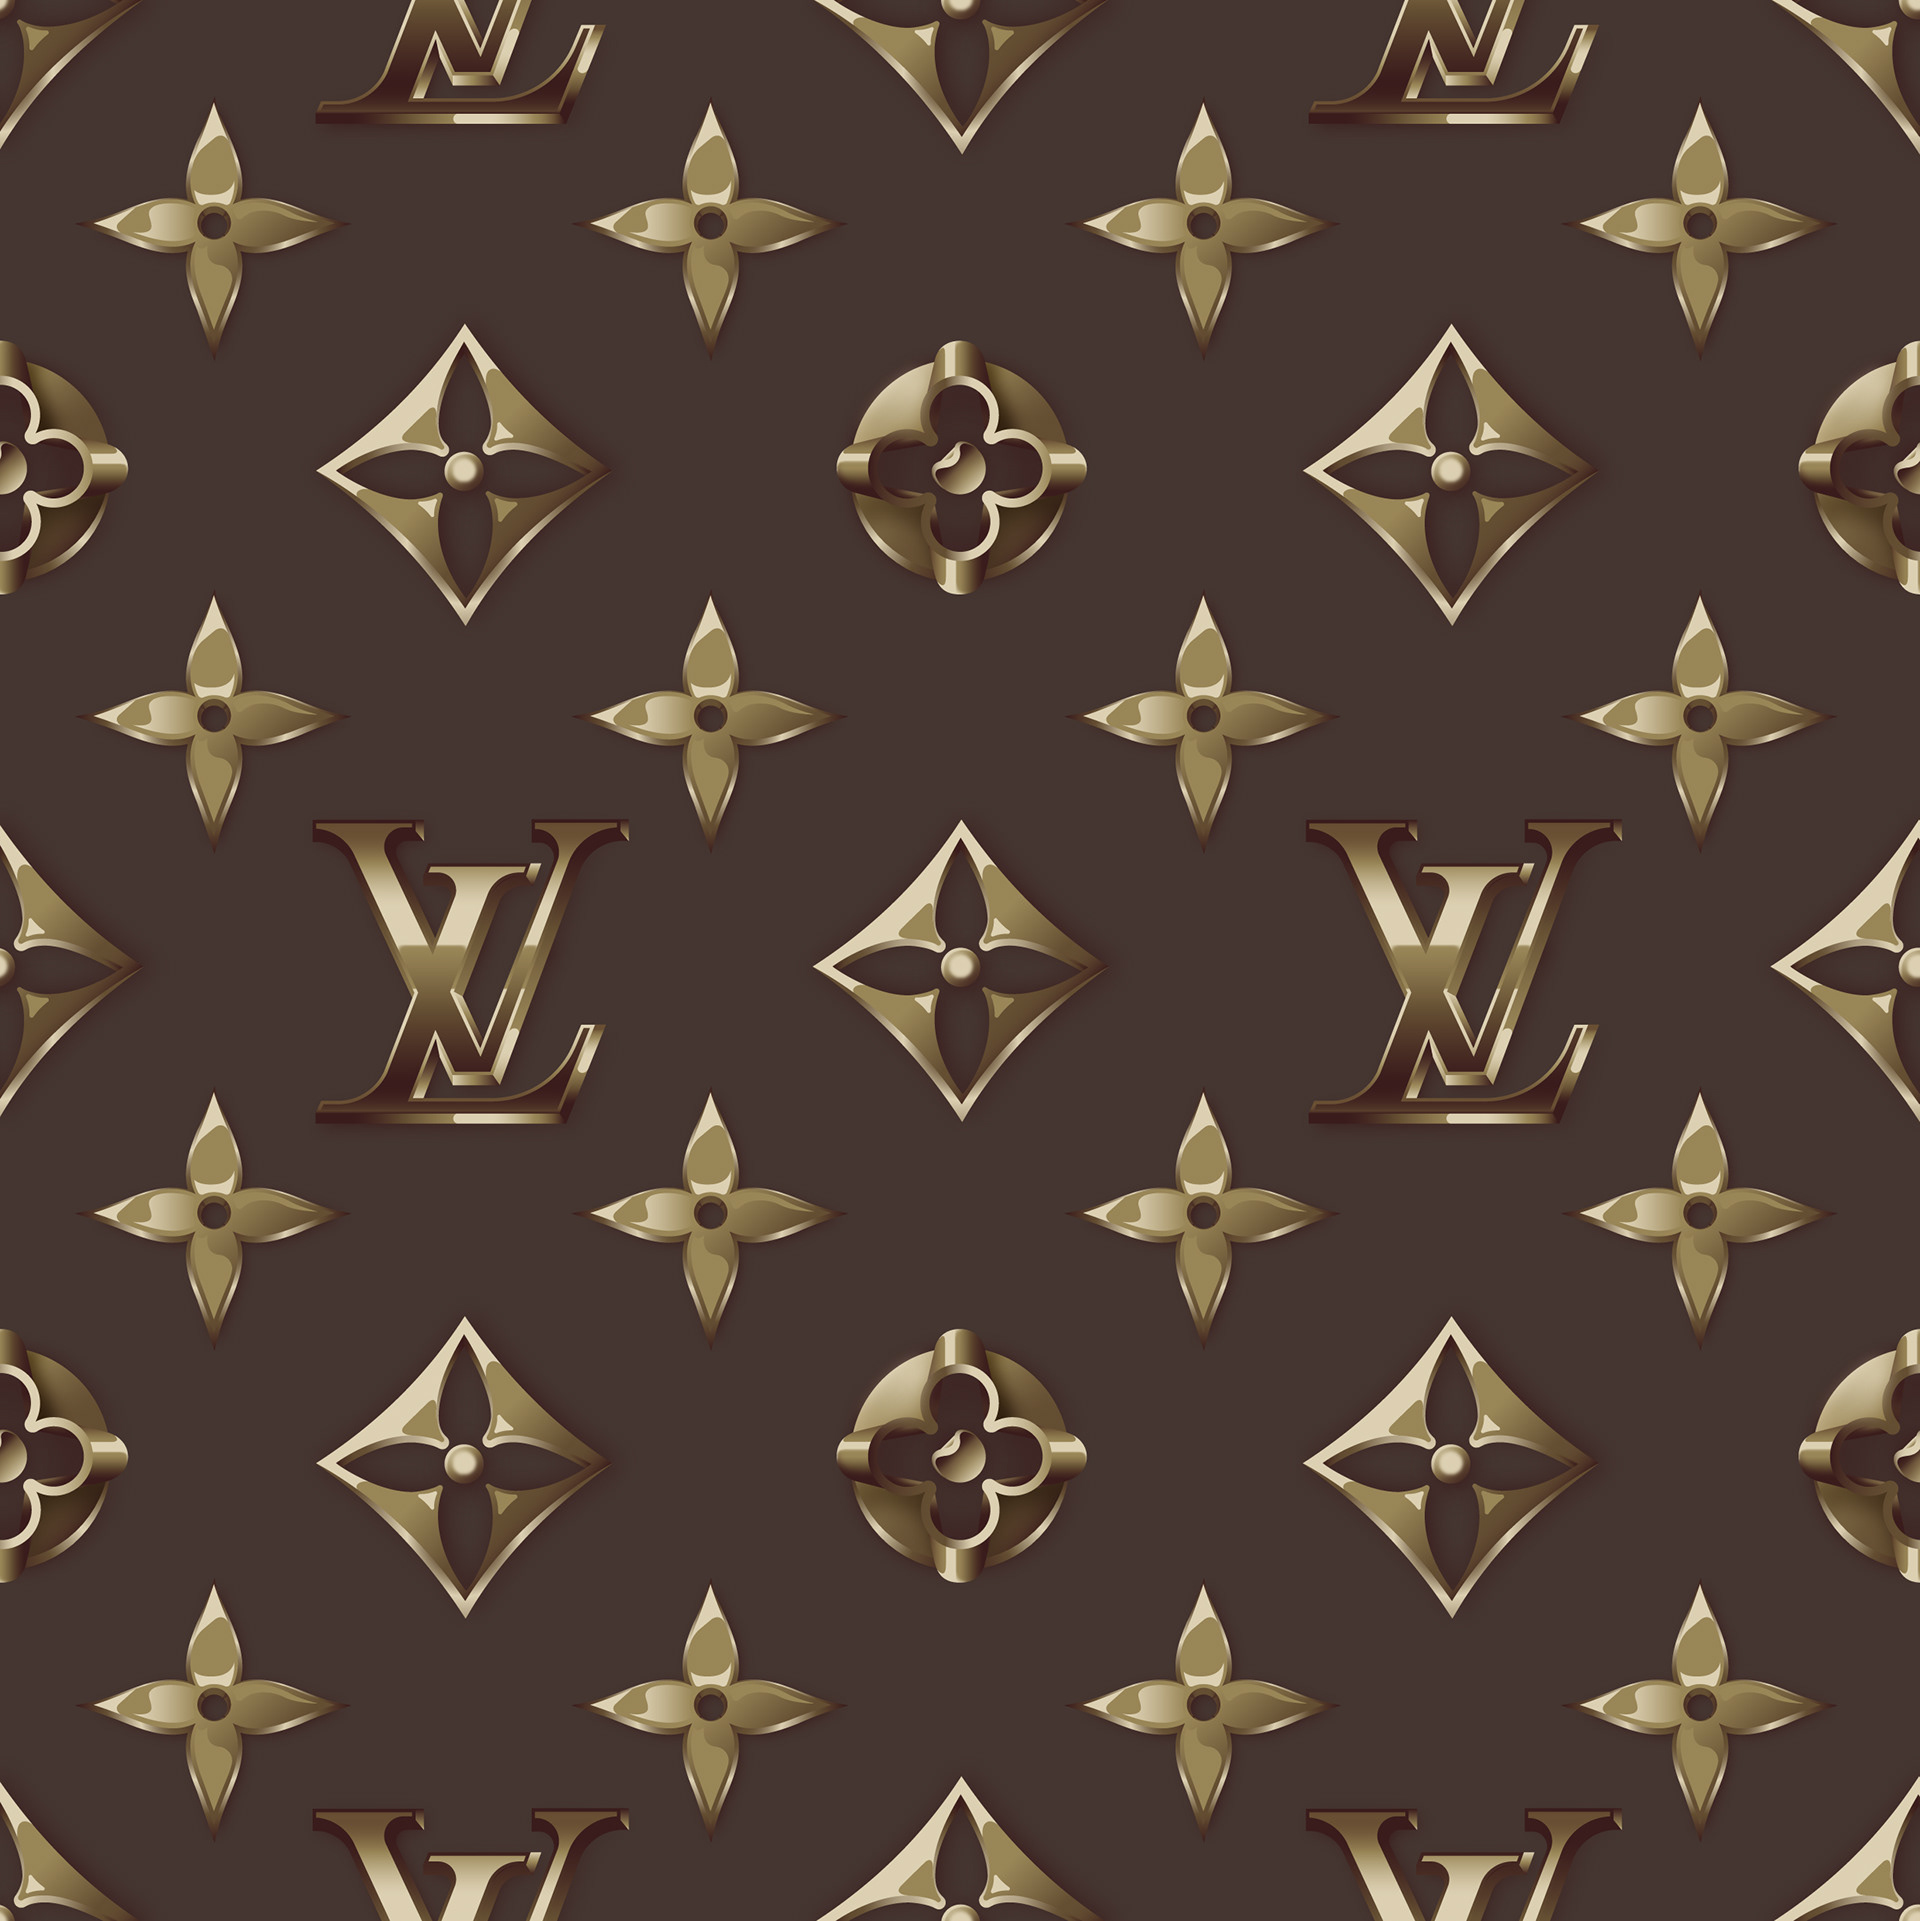 Louis Vuitton Pattern - Graphic Design